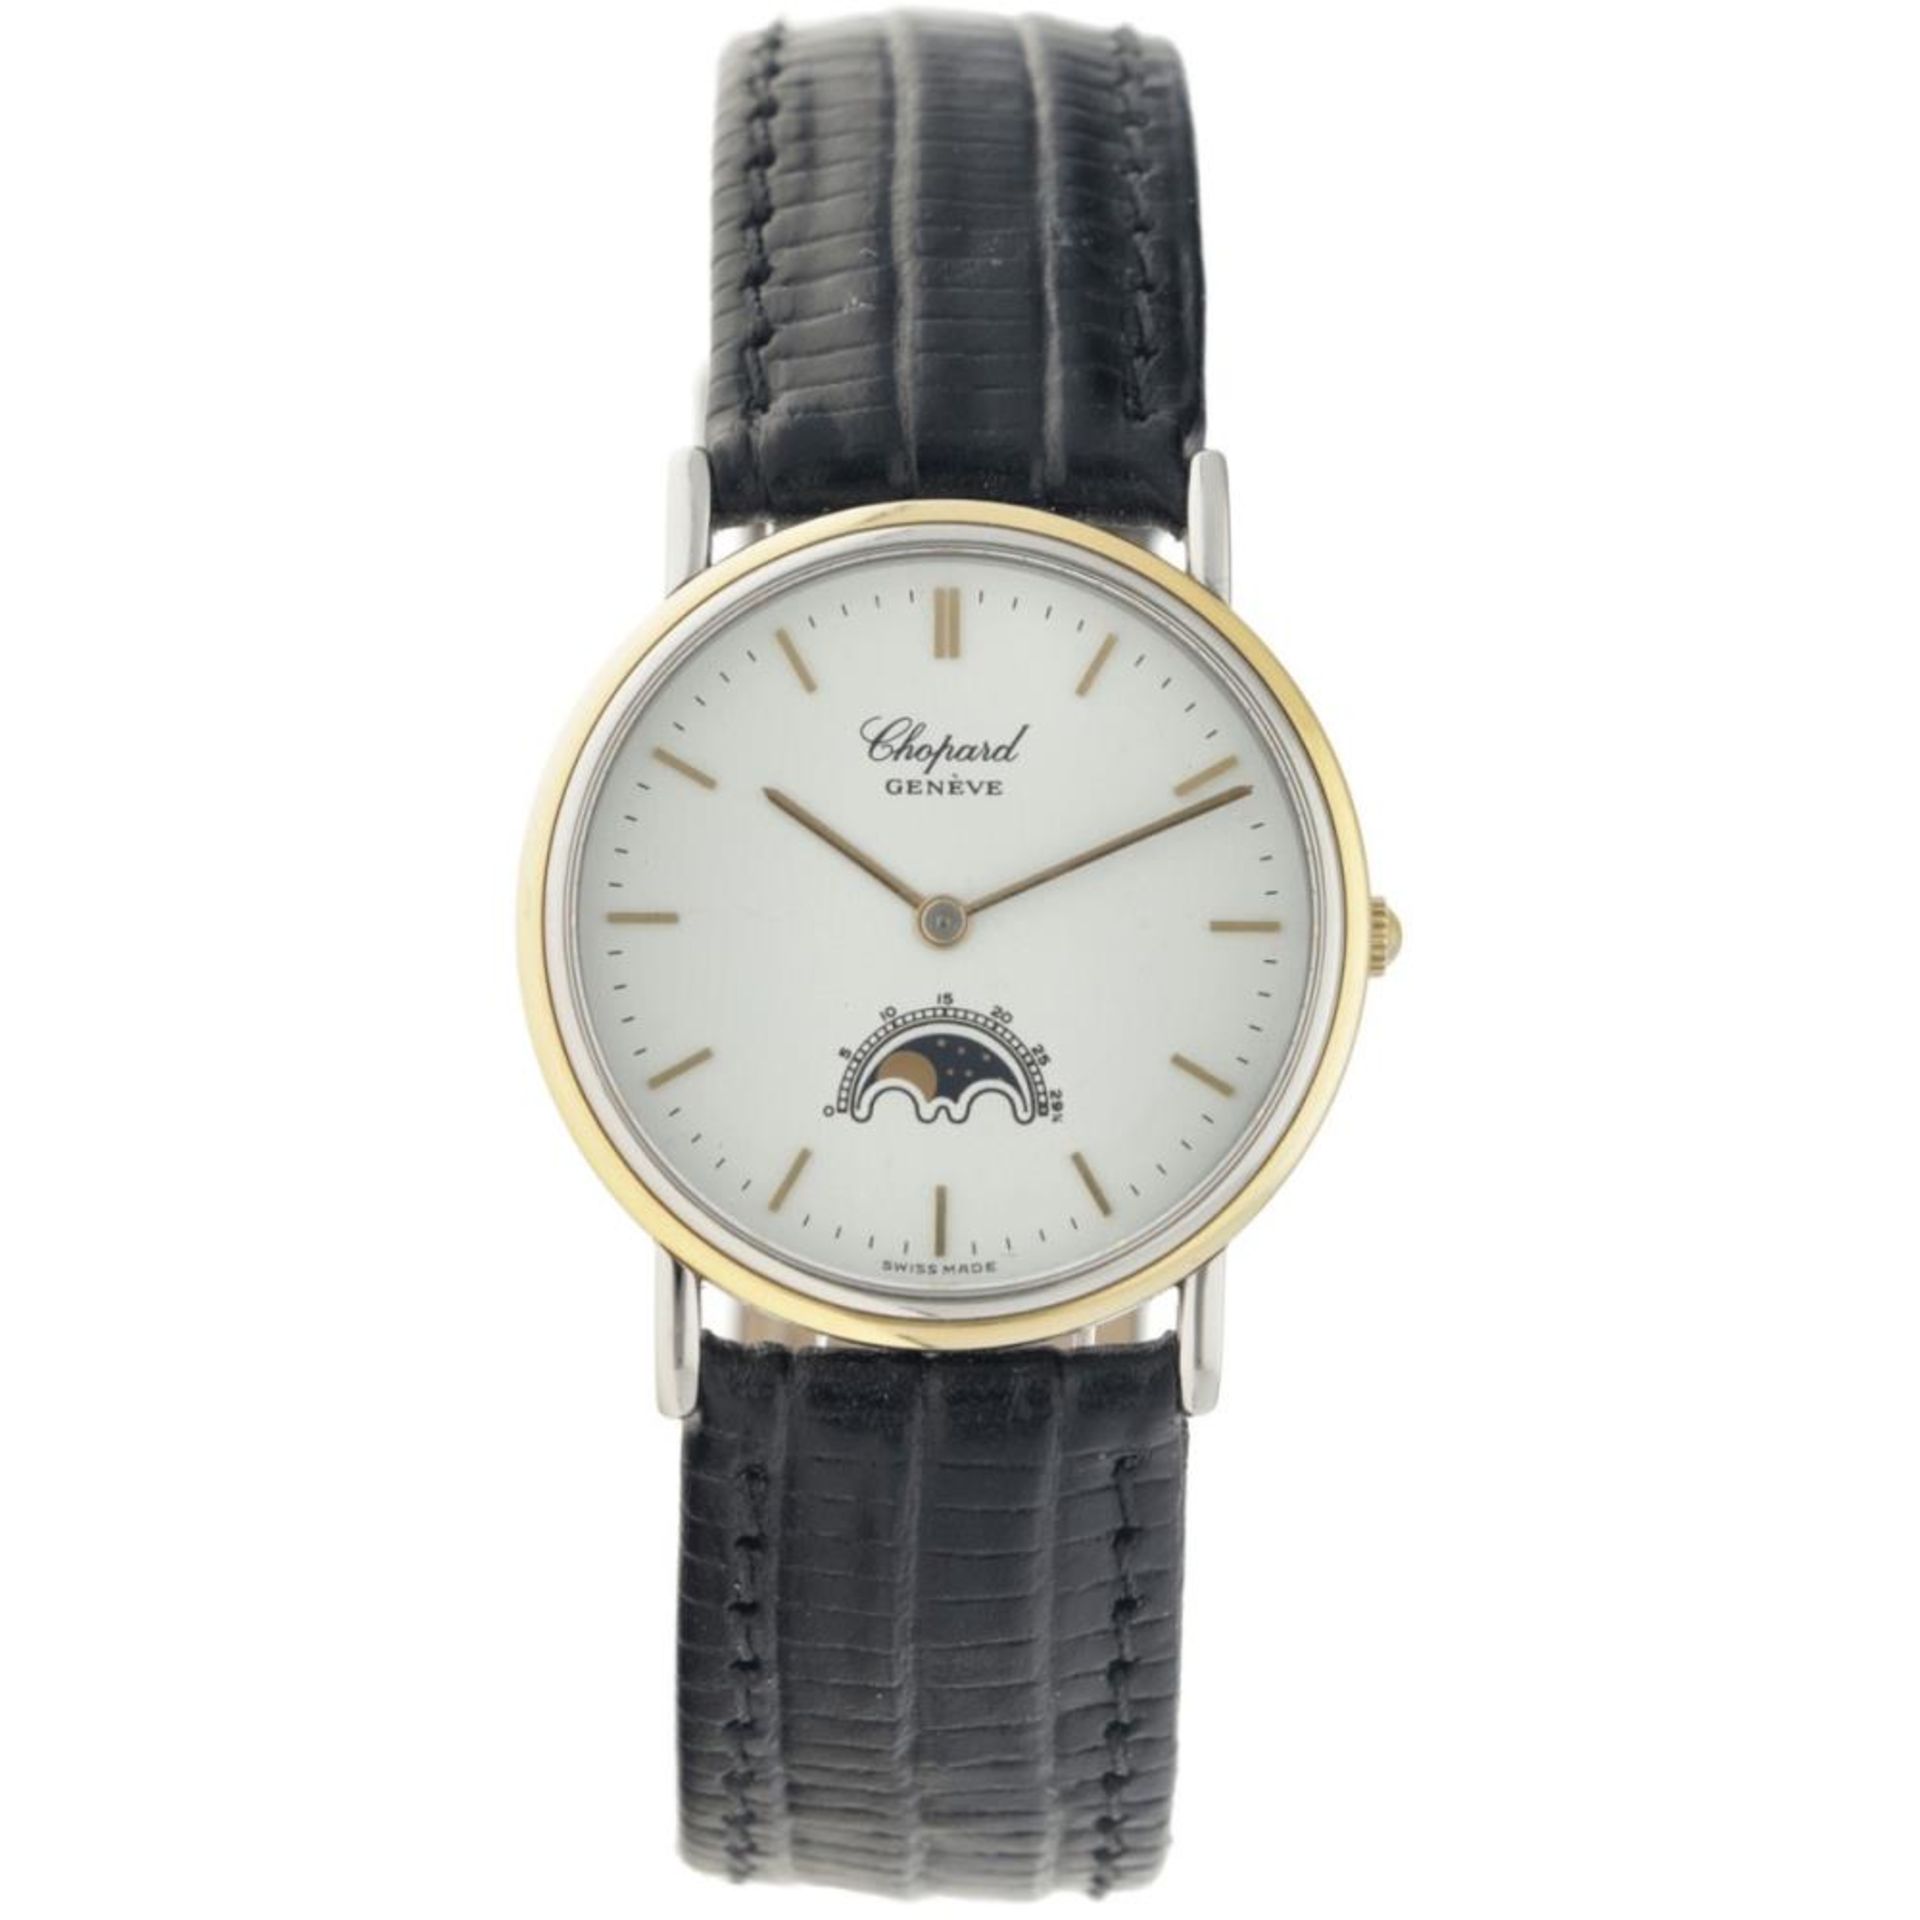 Chopard 36/8097 - Men's watch - approx. 1980.